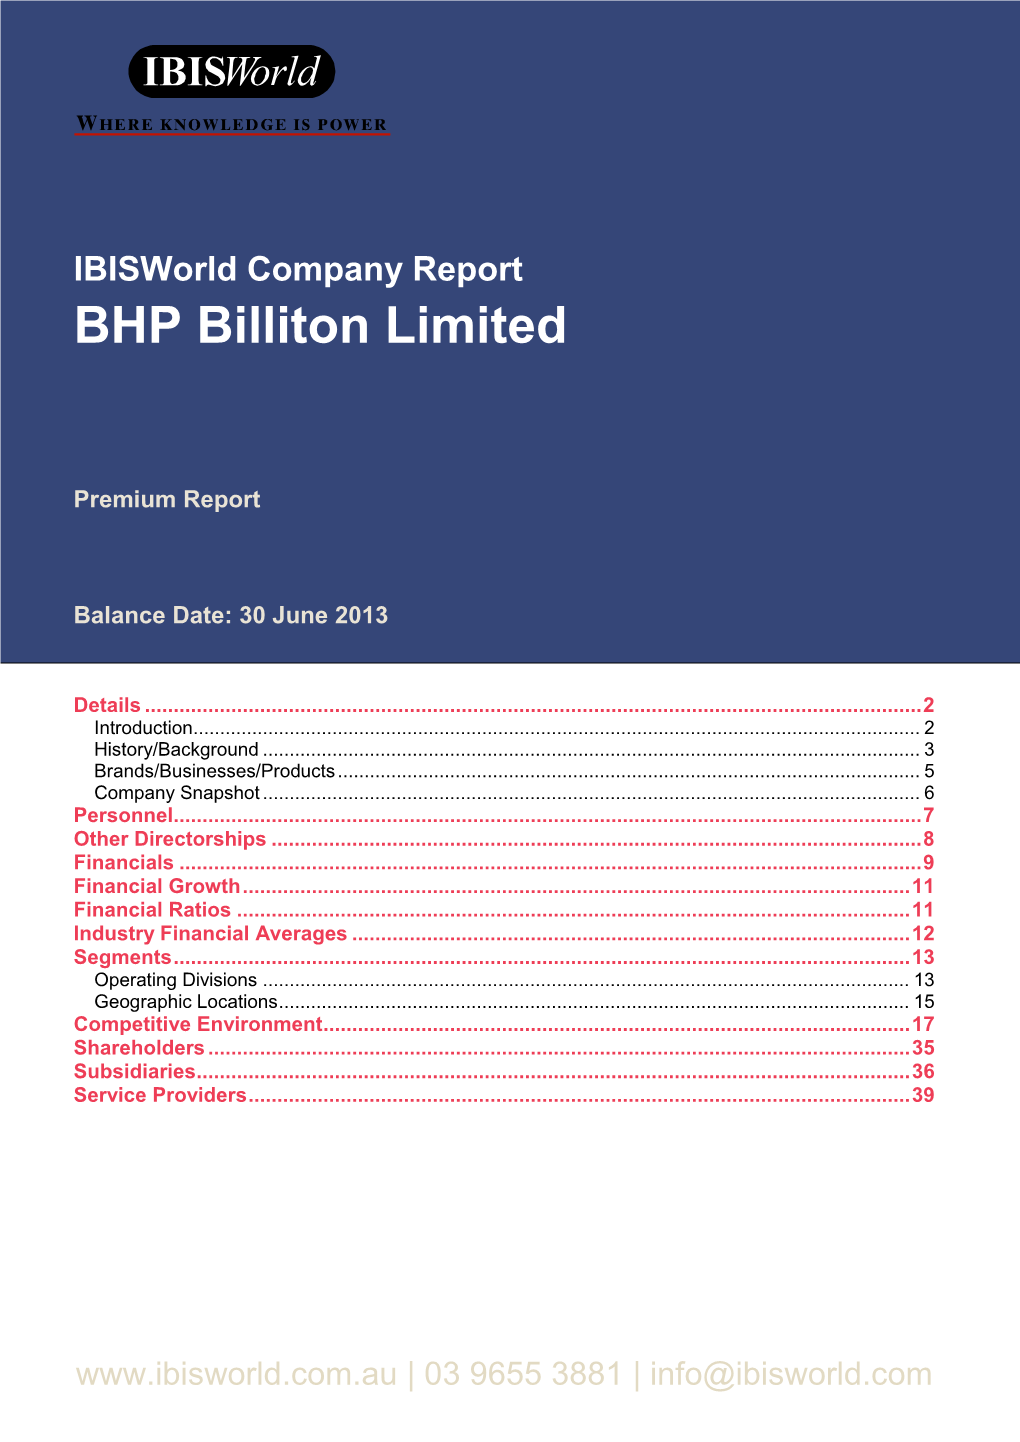 BHP Billiton Limited